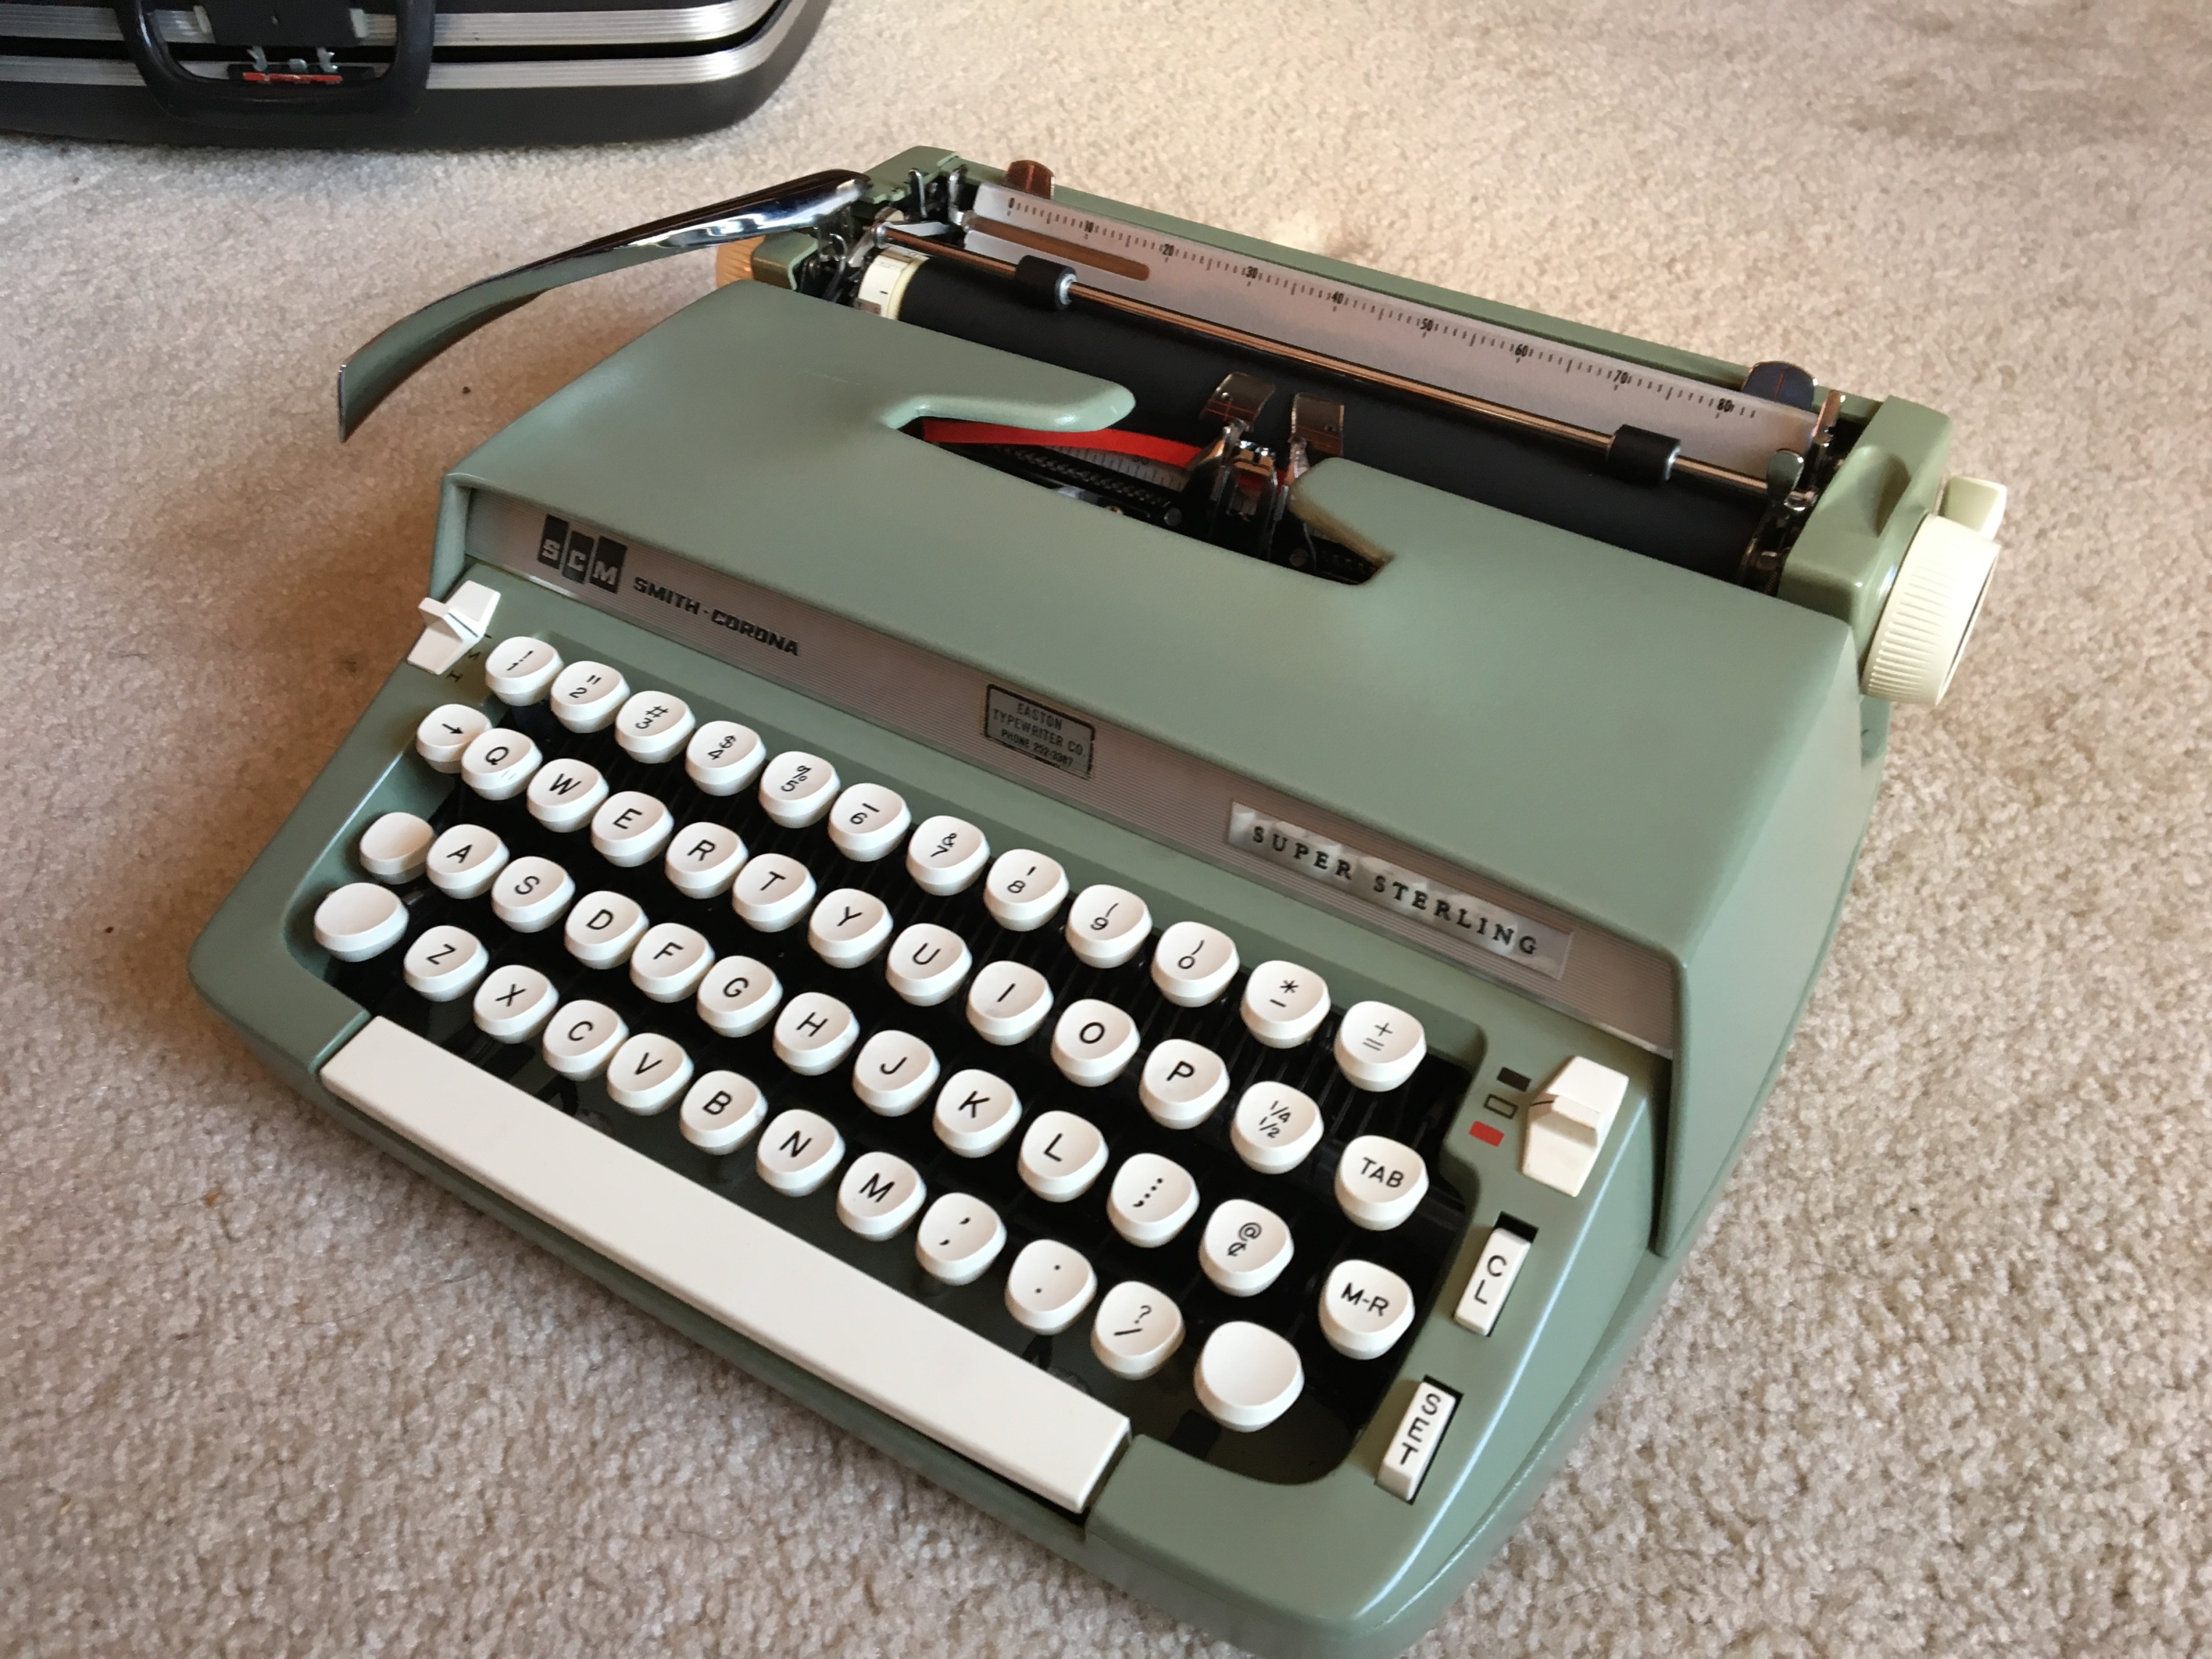 SCM Smith Corona Typewriter Super Sterling